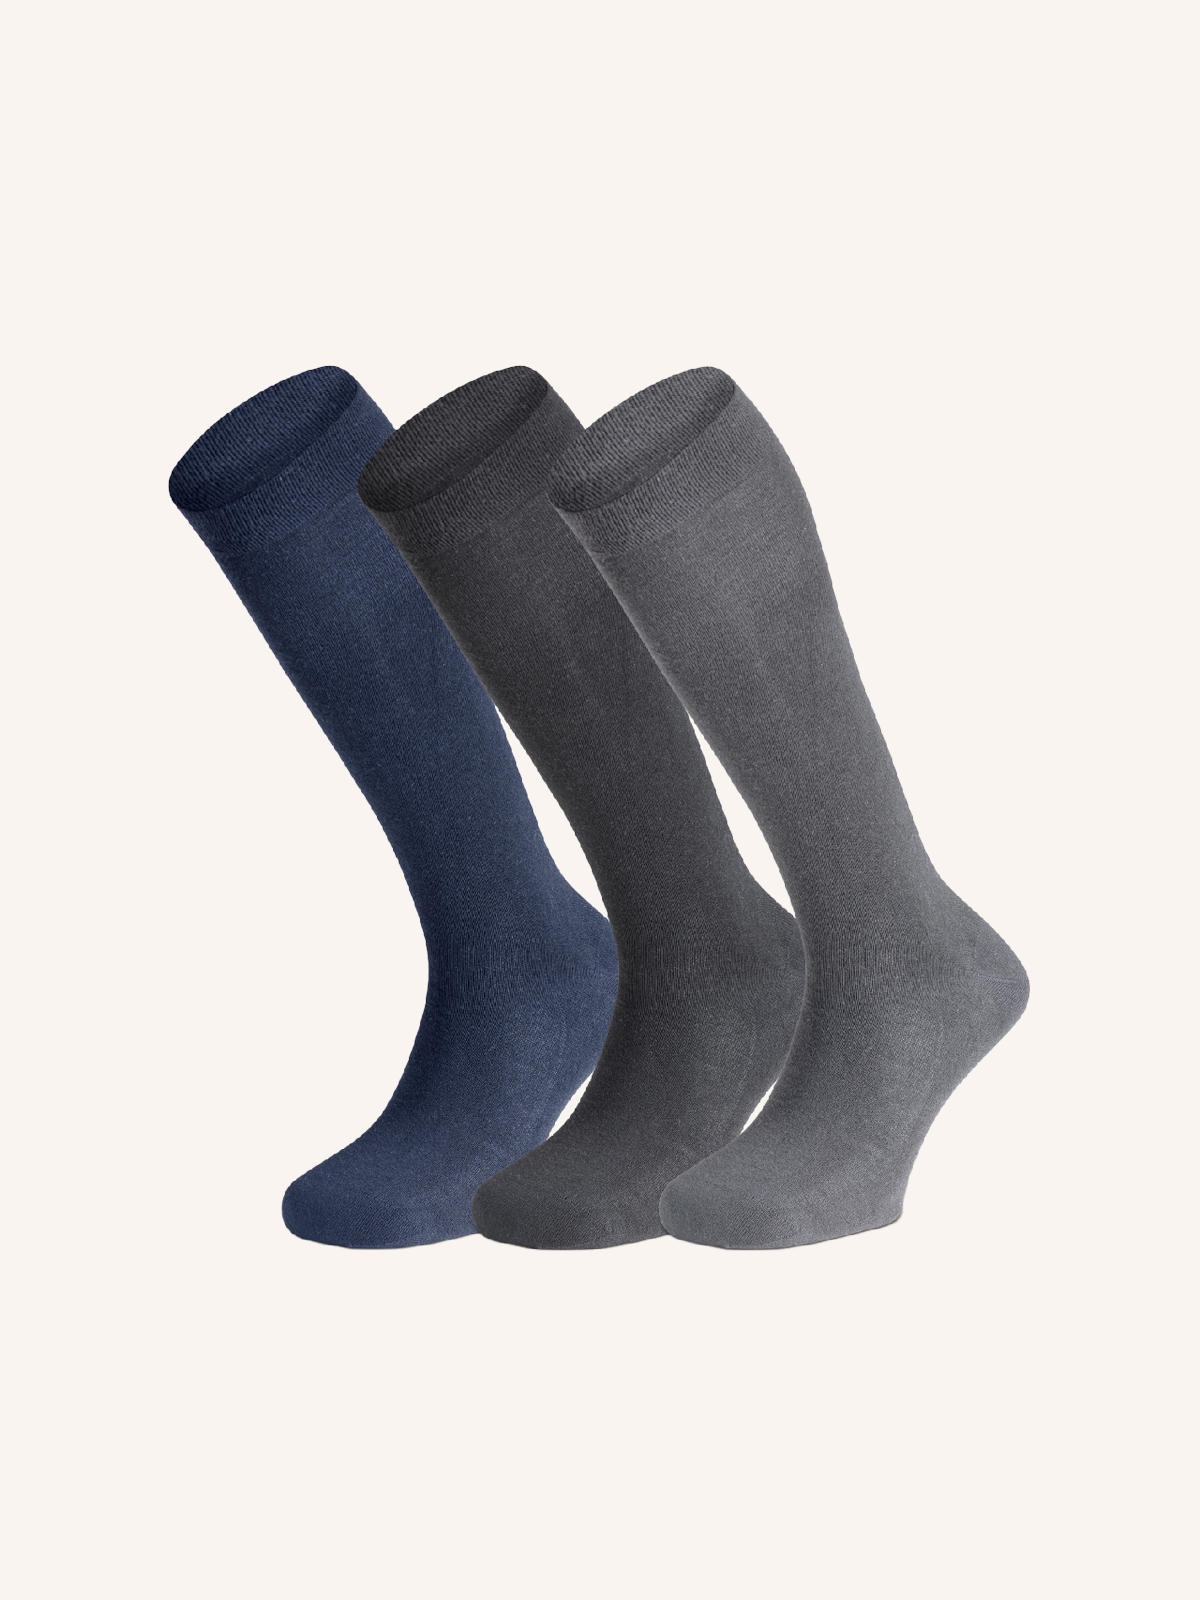 Organic Cotton Long Sock for Men | Plain Color | Pack of 3 Pairs | Bio Cotton UL